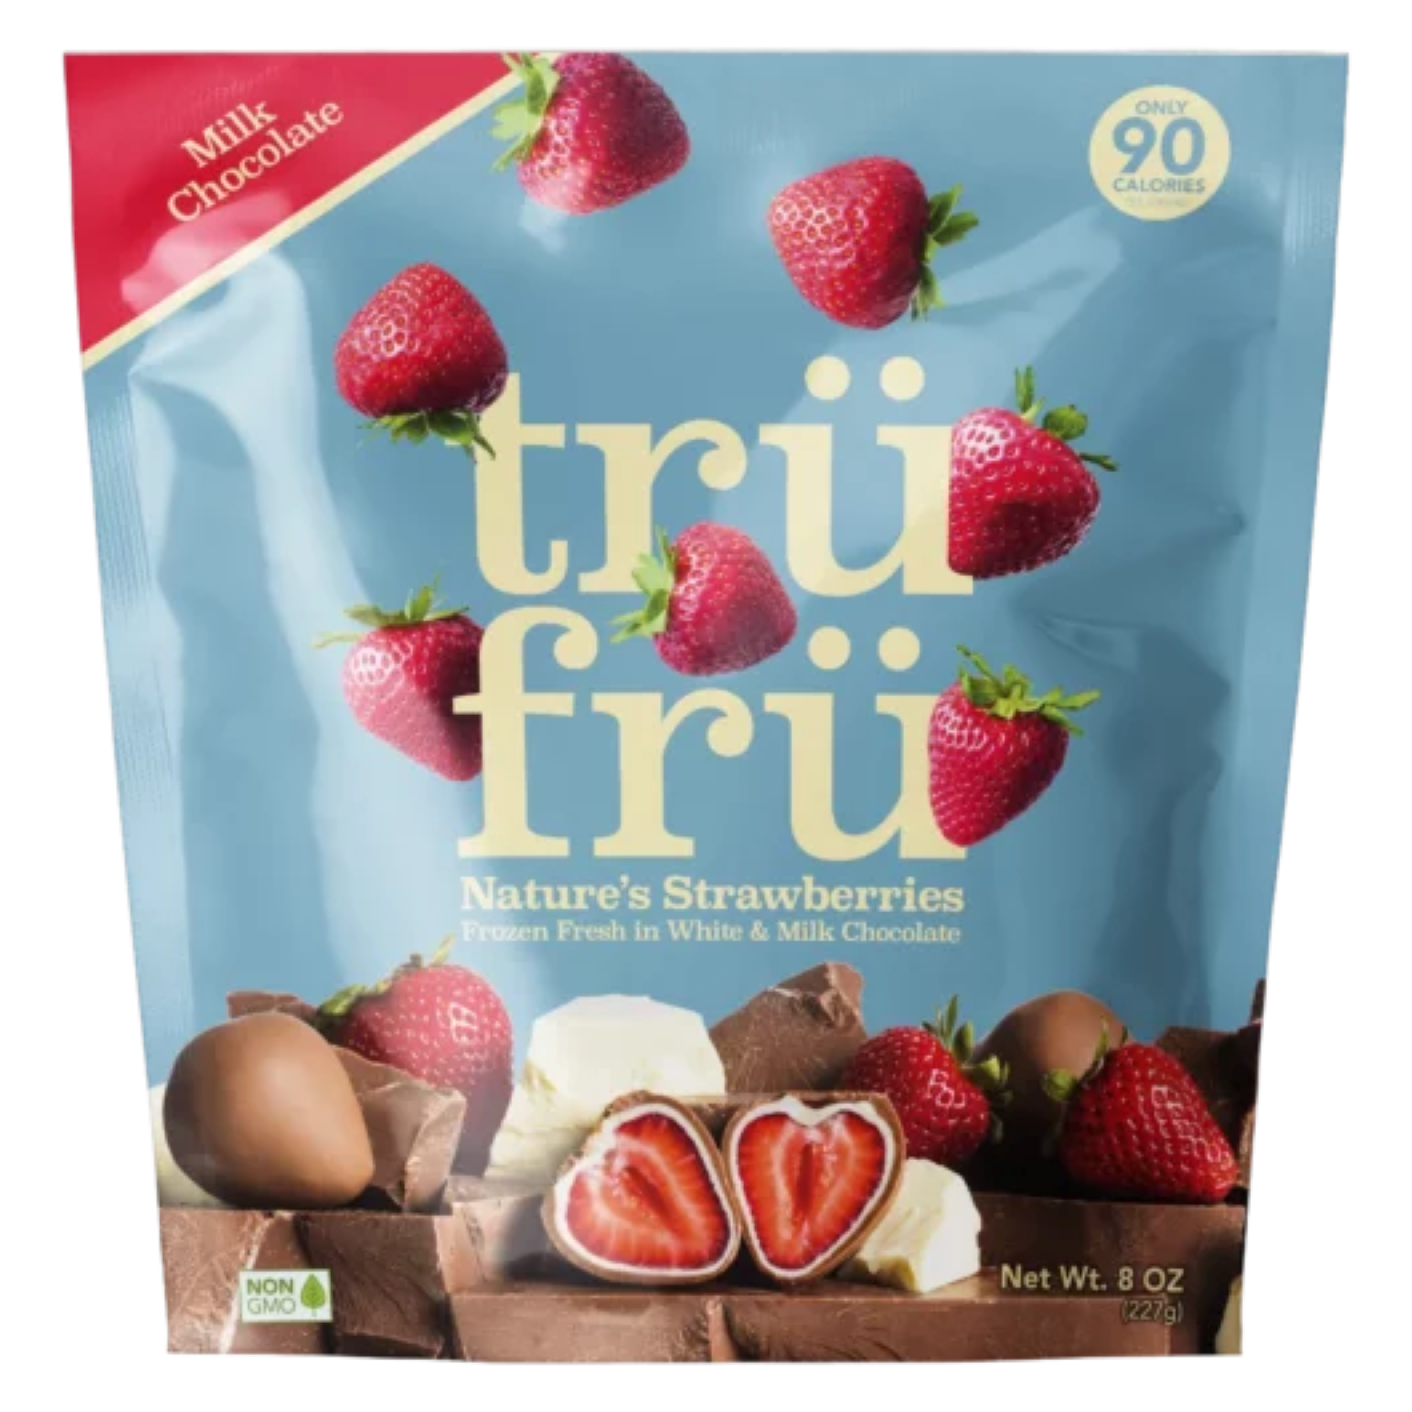 TruFru Natures Strawberries Hyper Chilled in White & Milk Chocolate